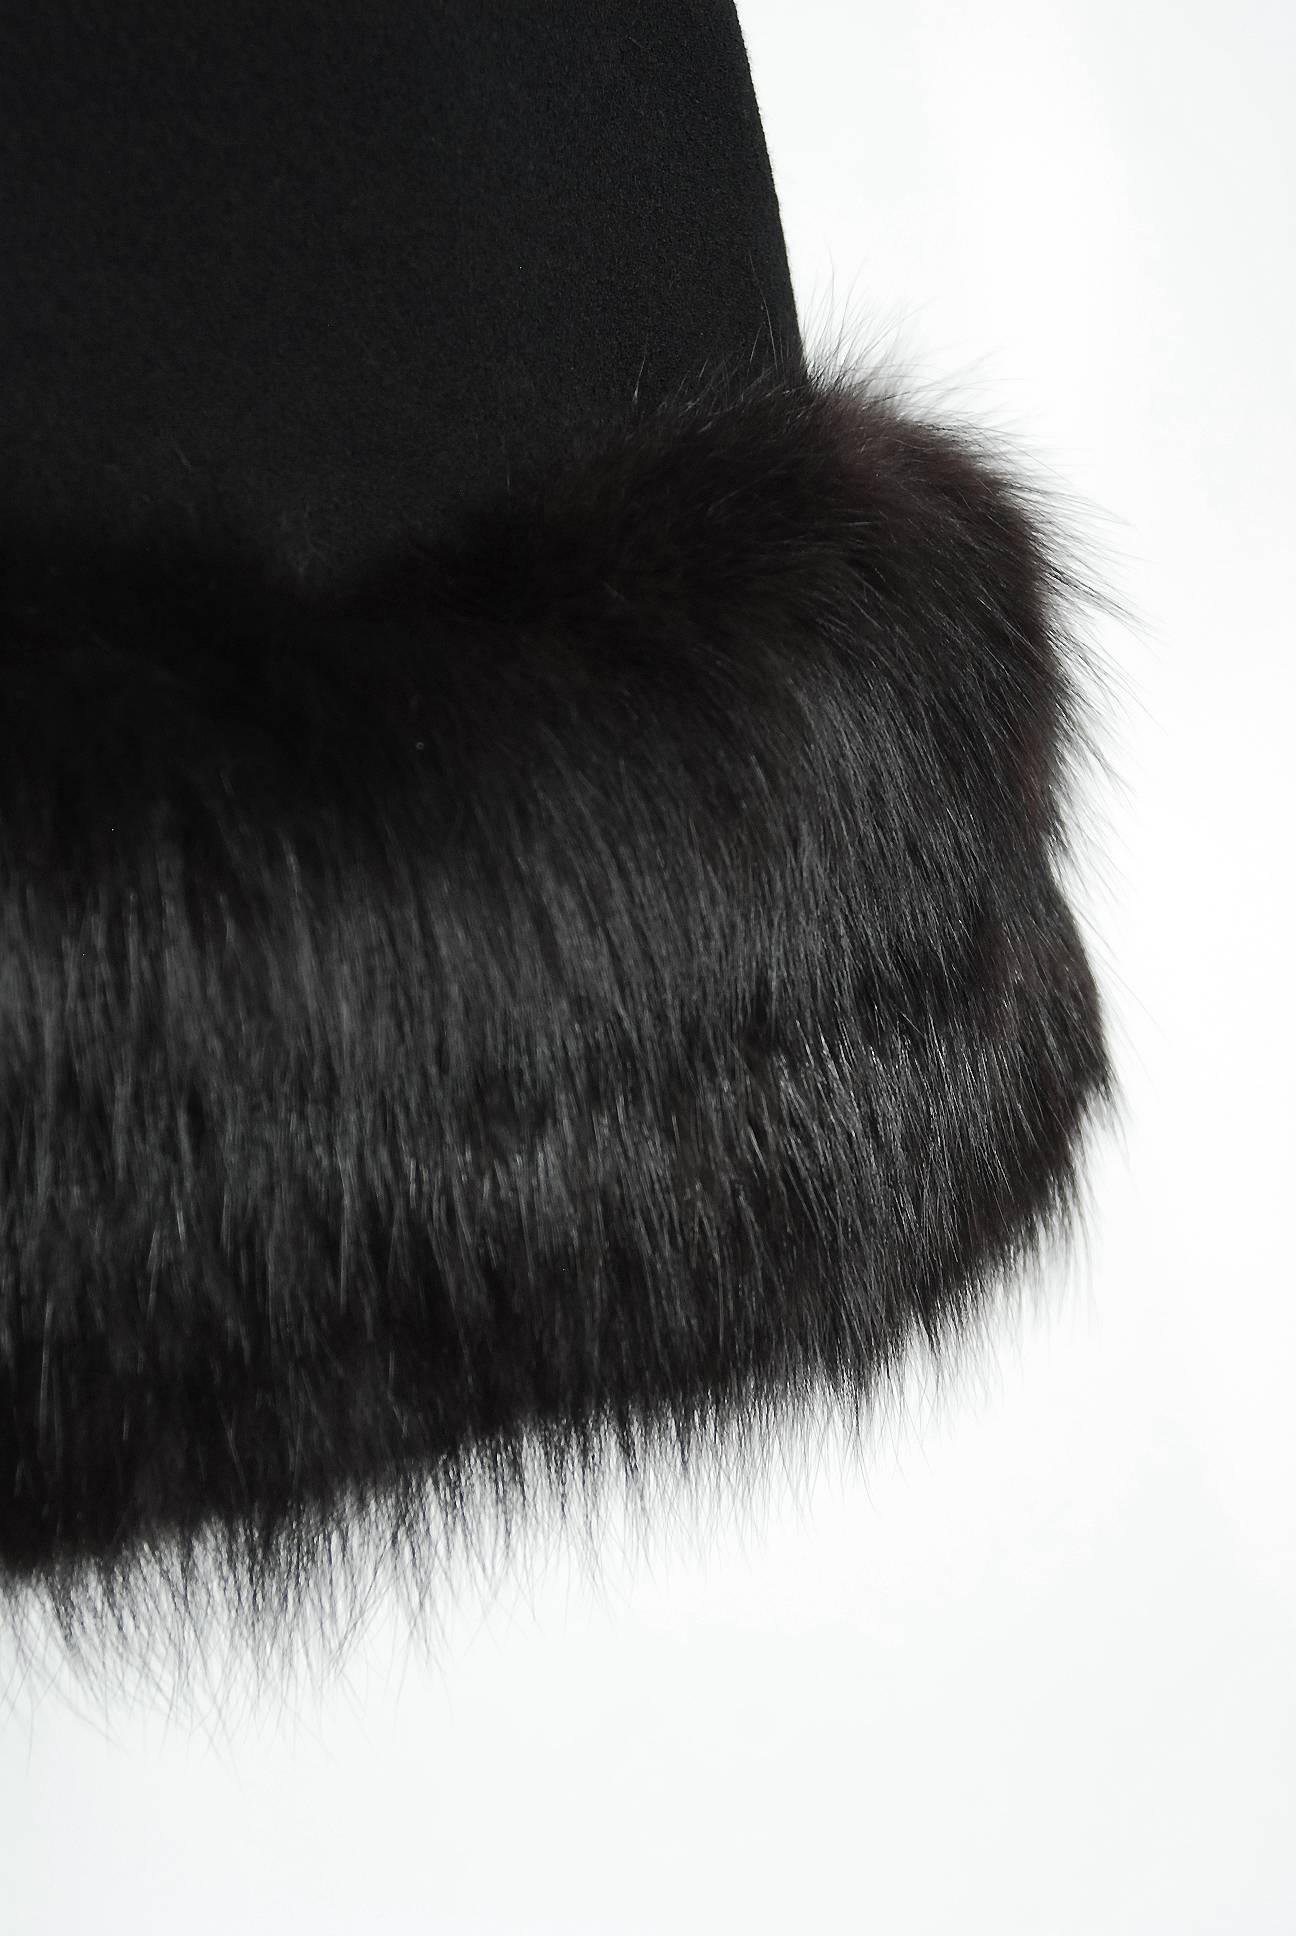 1965 Pauline Trigere Black Wool & Genuine Fox-Fur Cocktail Dress & Capelet Set 1